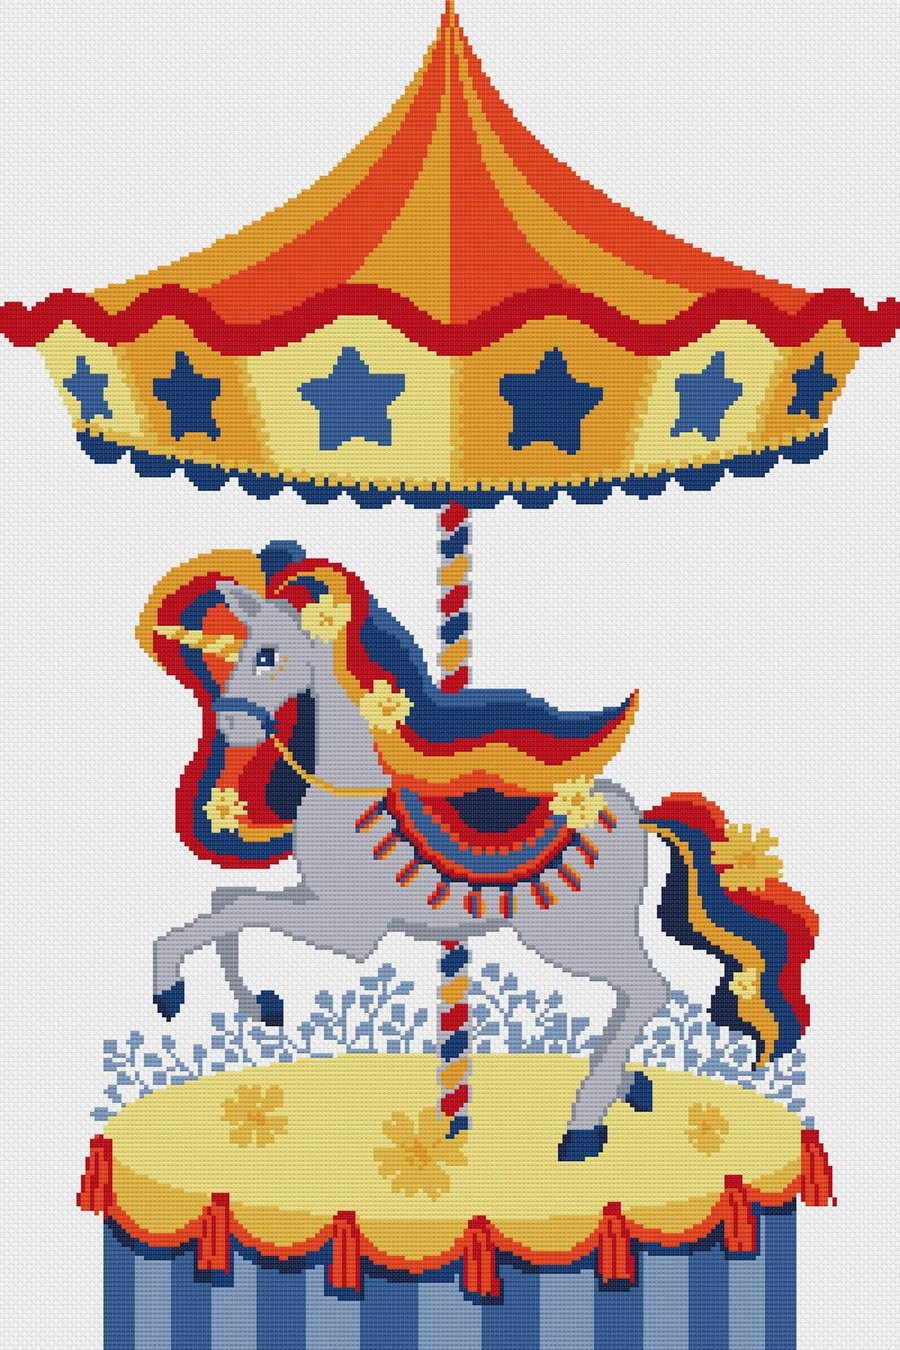 136 - Colourful Unicorn Carousel Horse - Cross Stitch Pattern